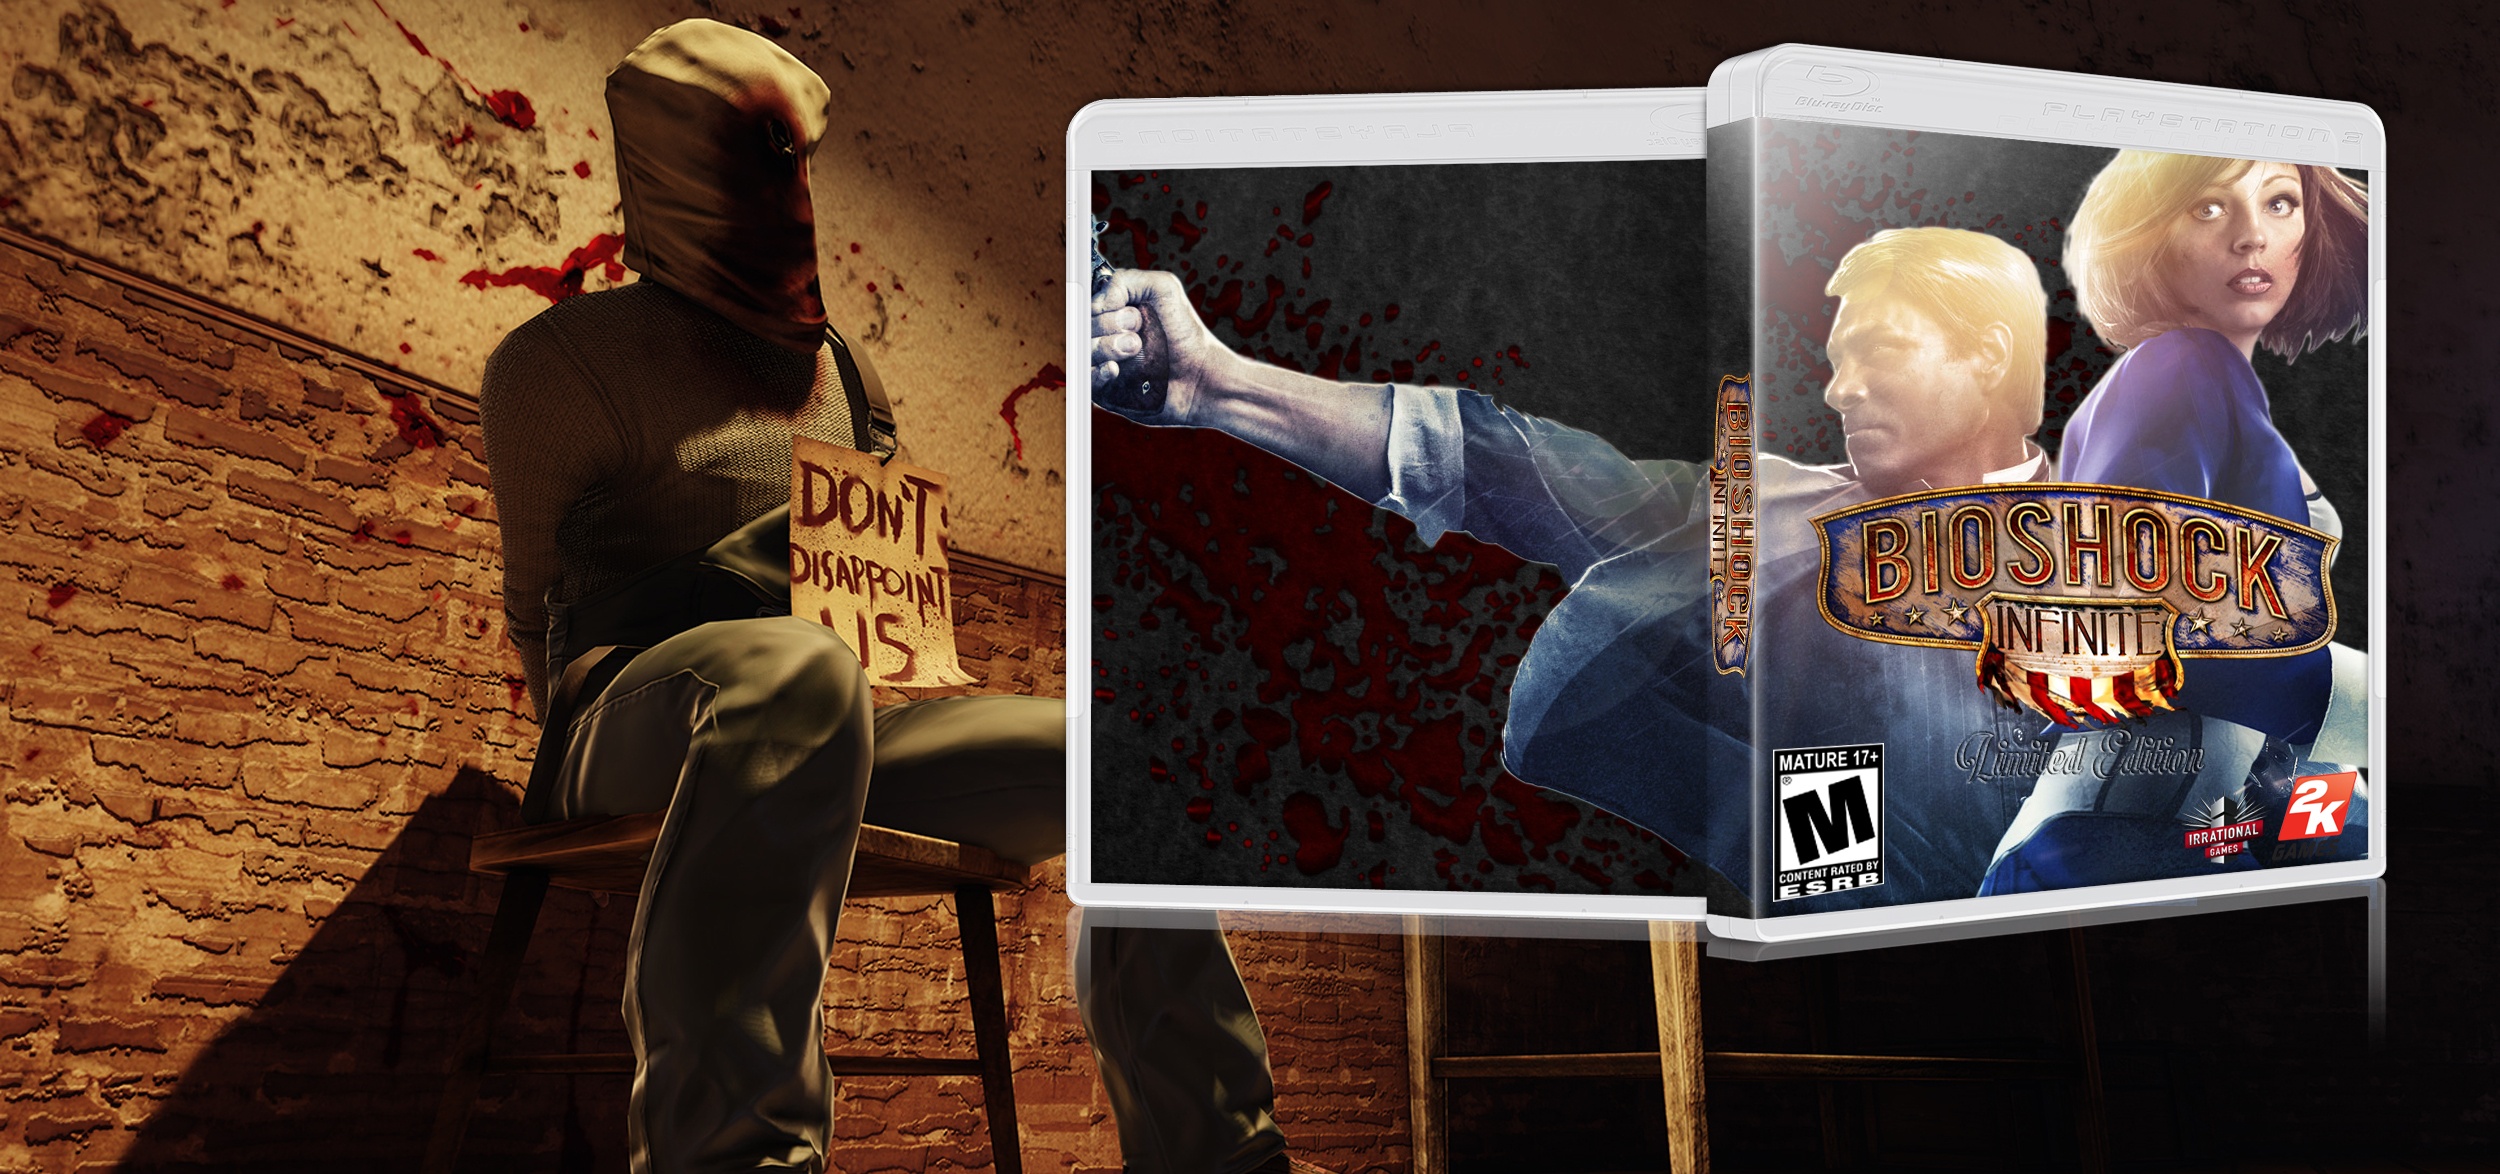 BioShock Infinite Limited Edition box cover